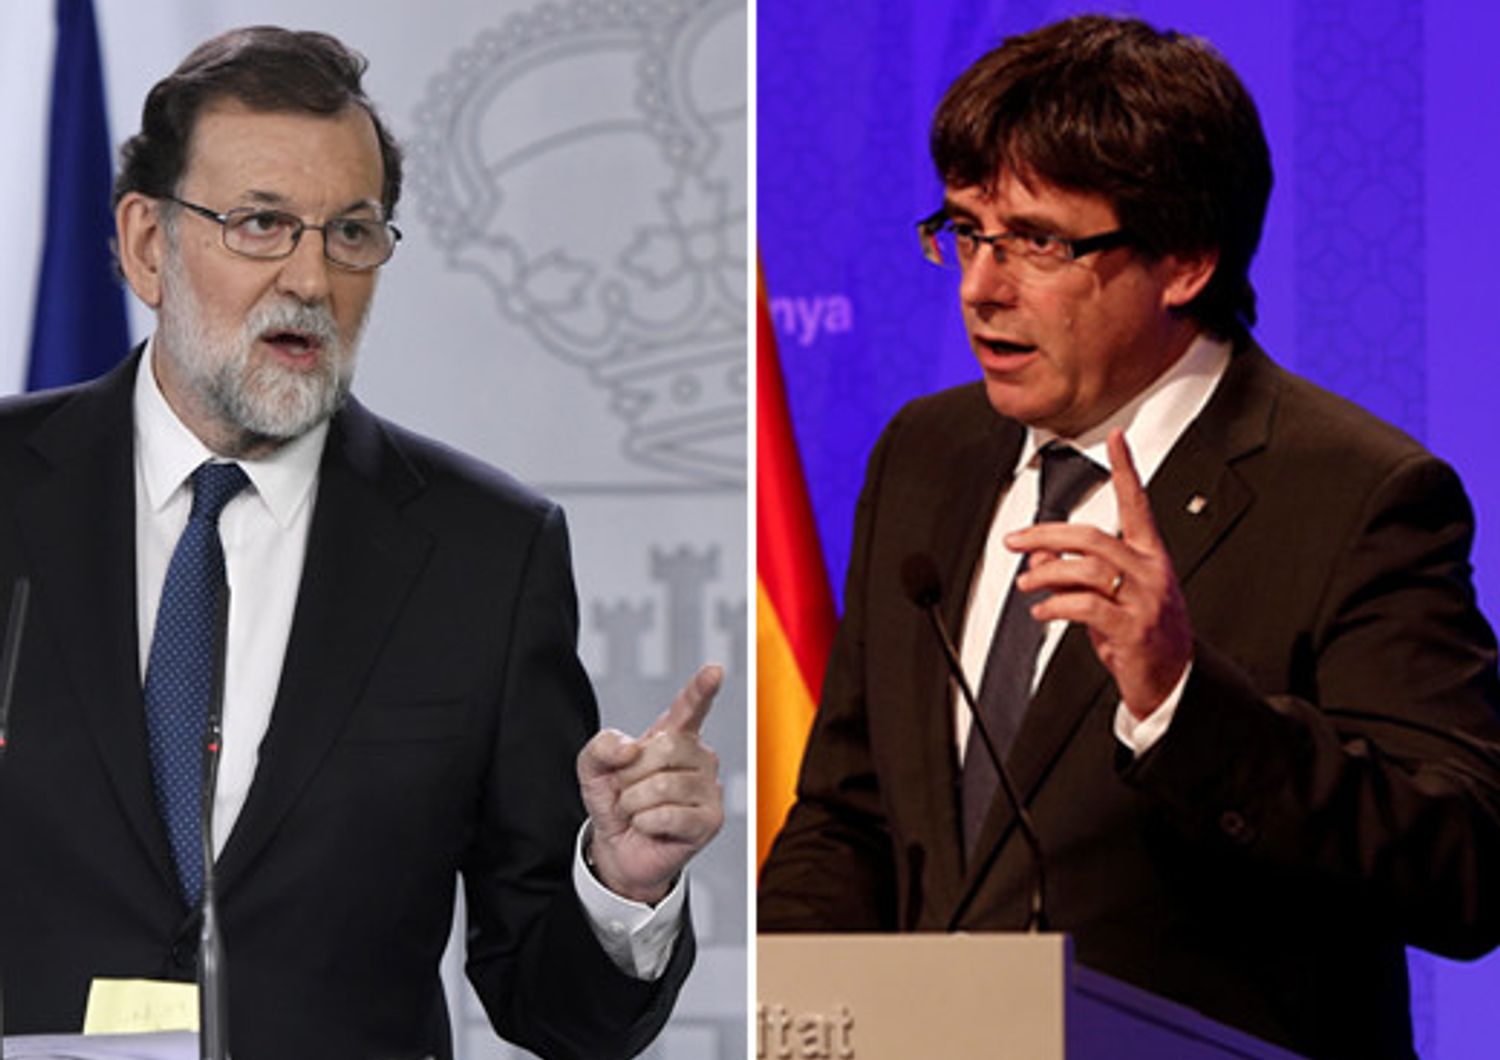 Mariano Rajoy vs Carles Puigdemont&nbsp;